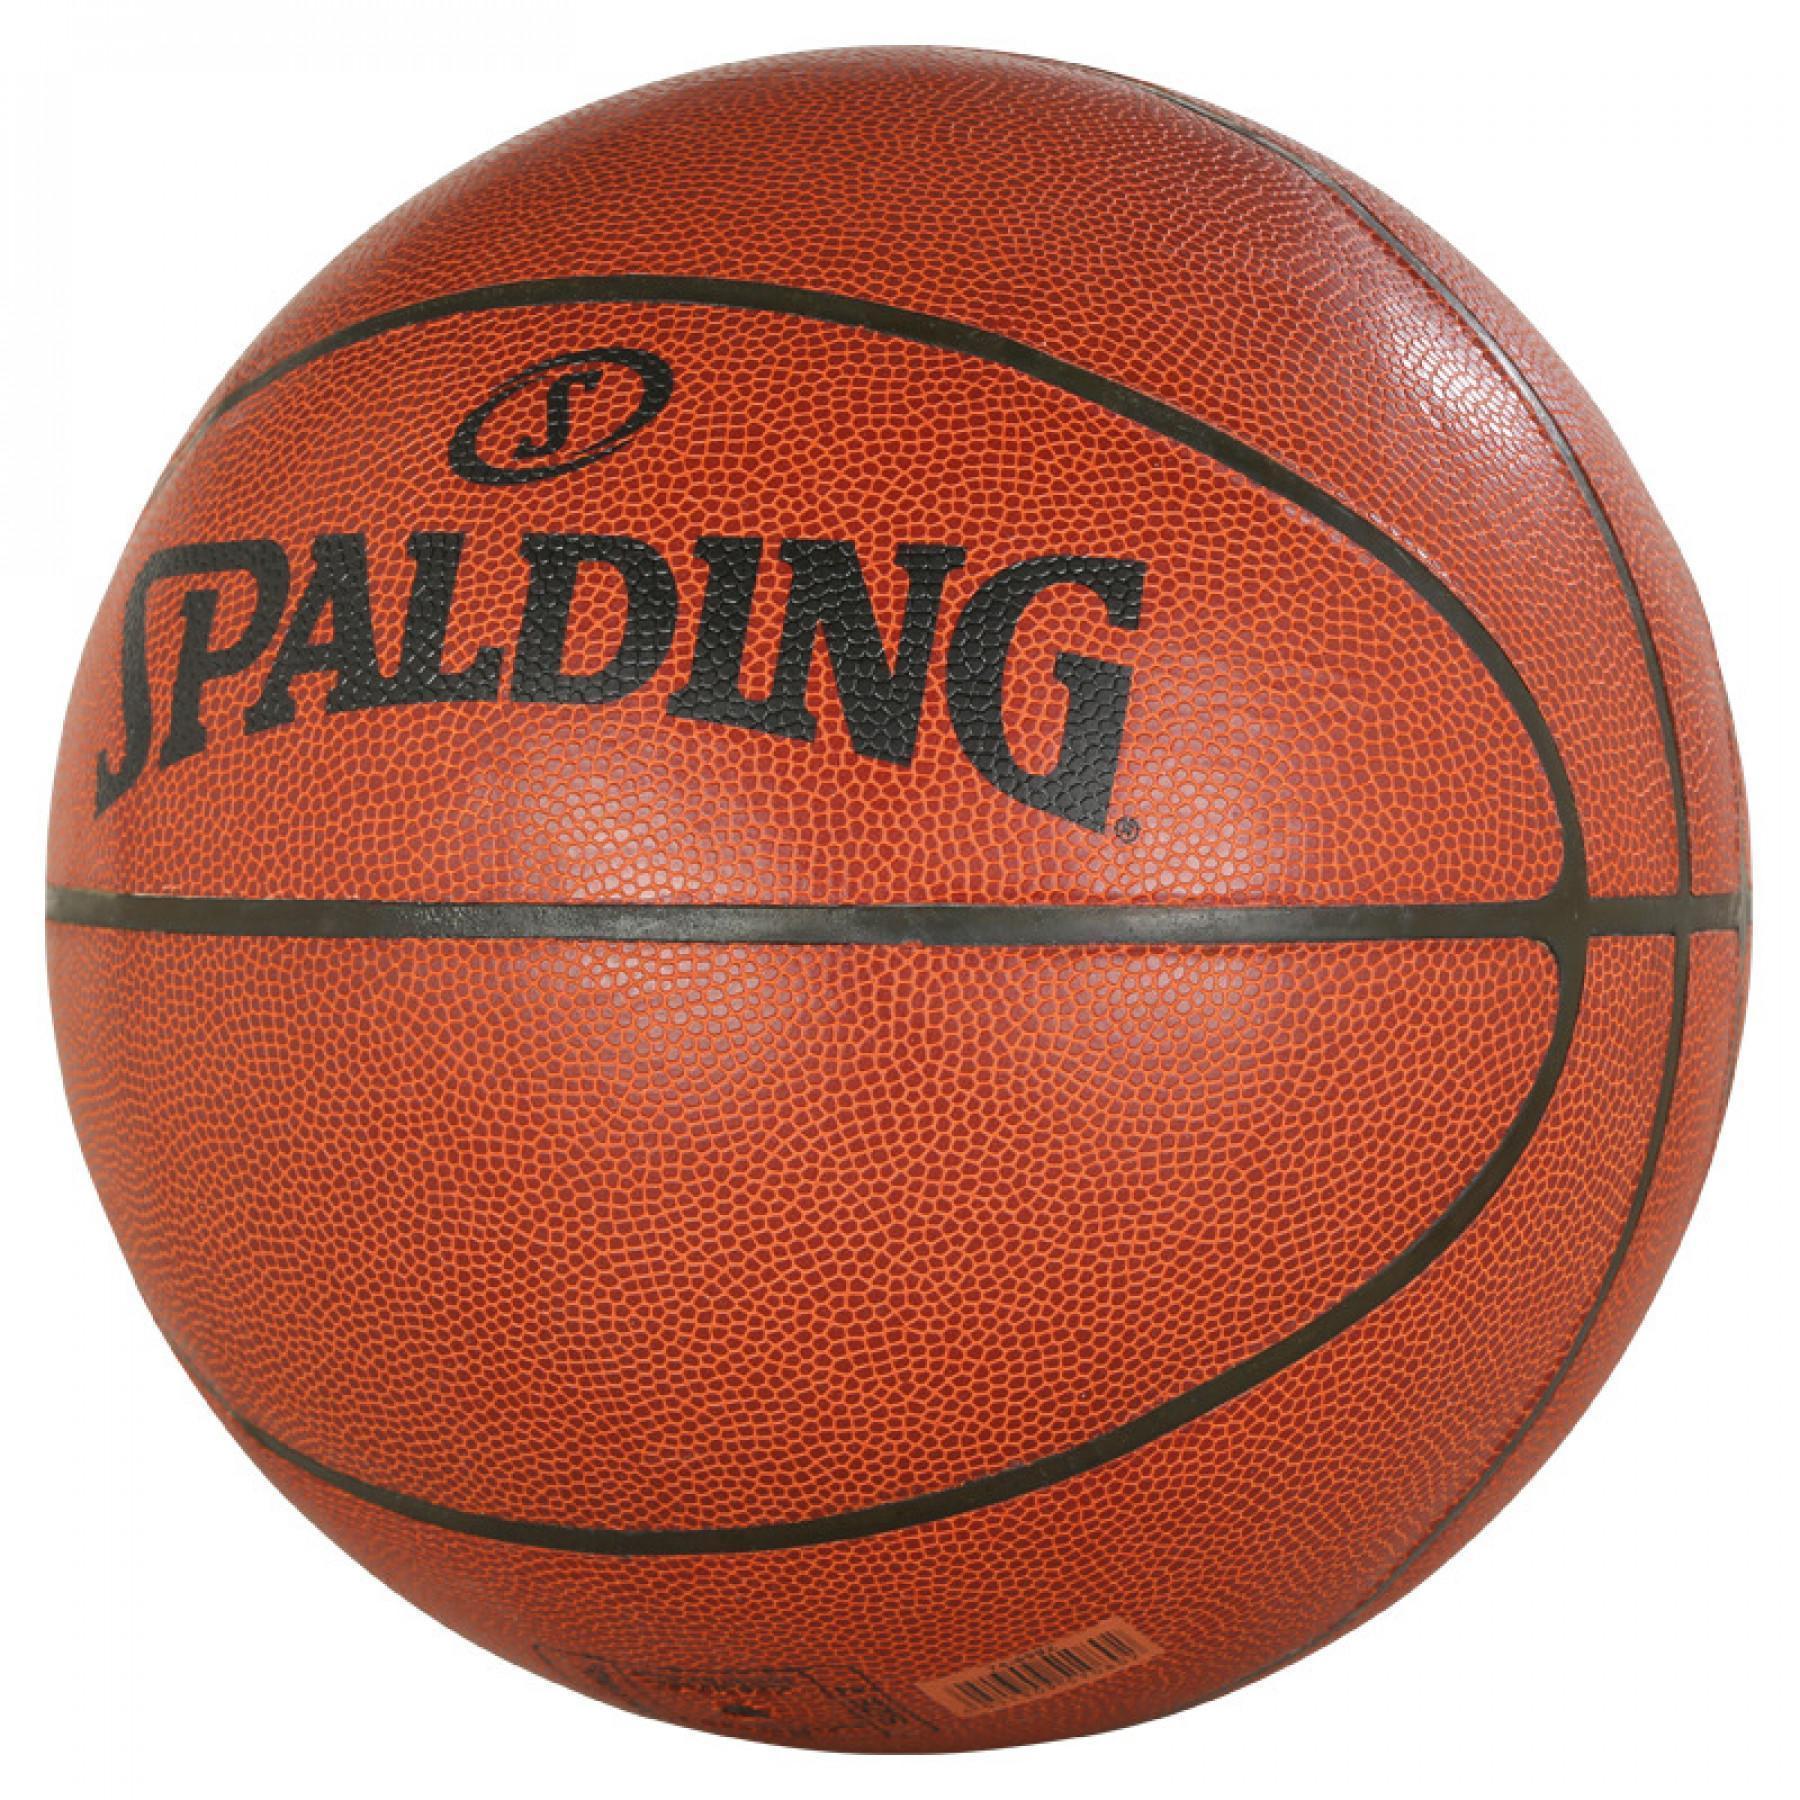 Balloon Spalding Customizing (74-699z)